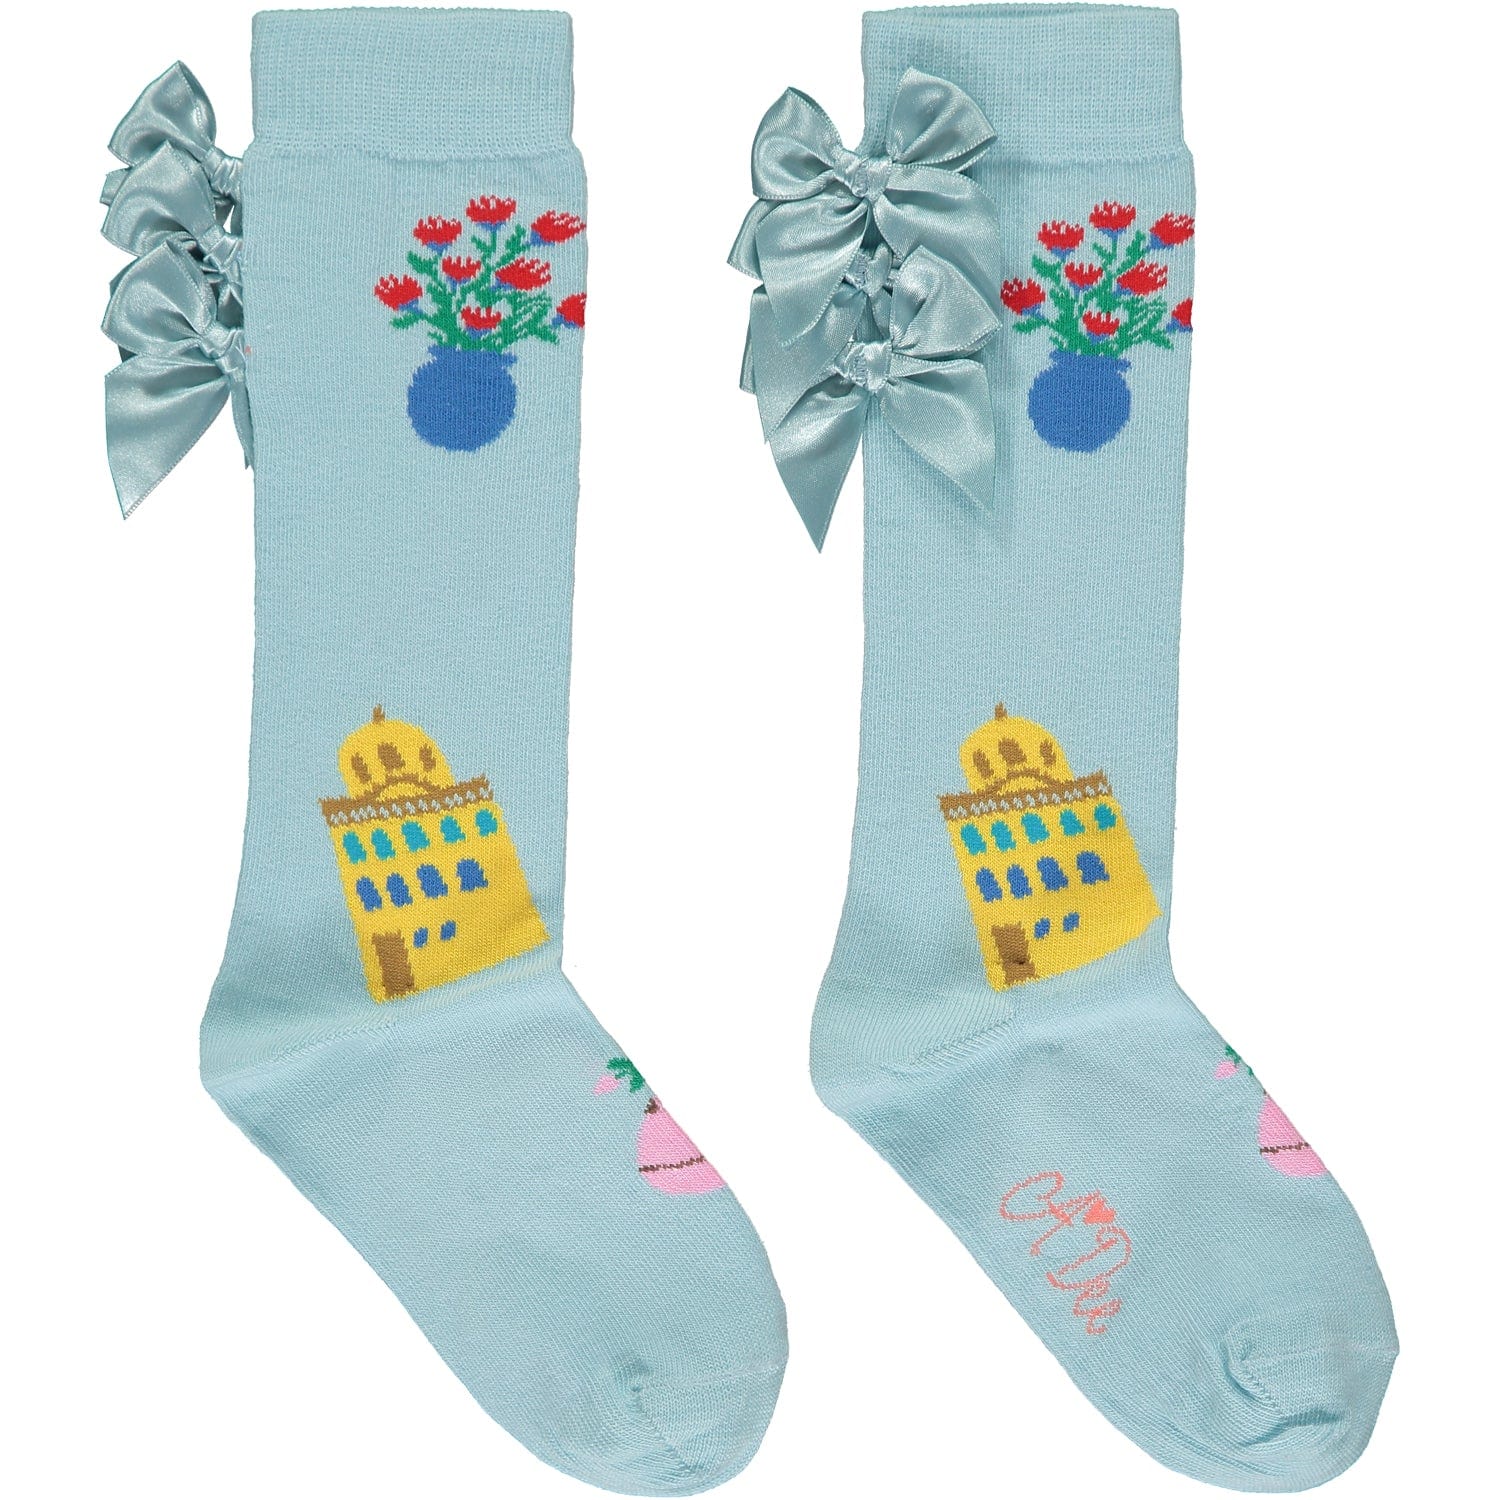 A DEE - Uranda La Isla Bonita Knee High Socks - Aqua